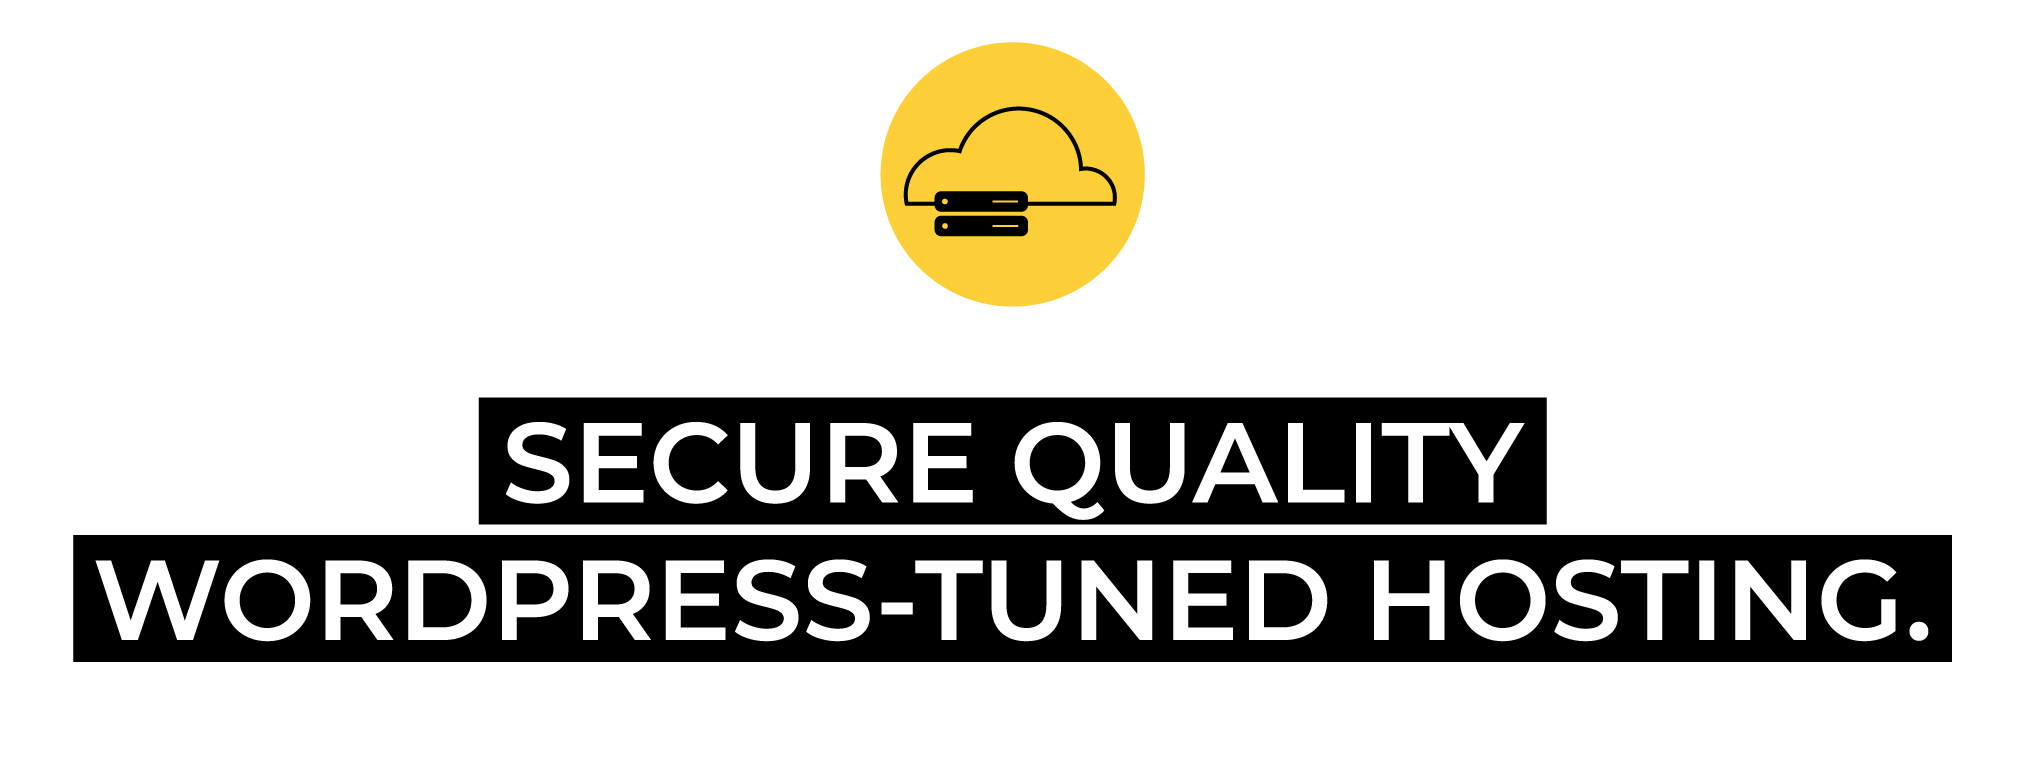 Secure Quality WordPress-Tuned Hosting.